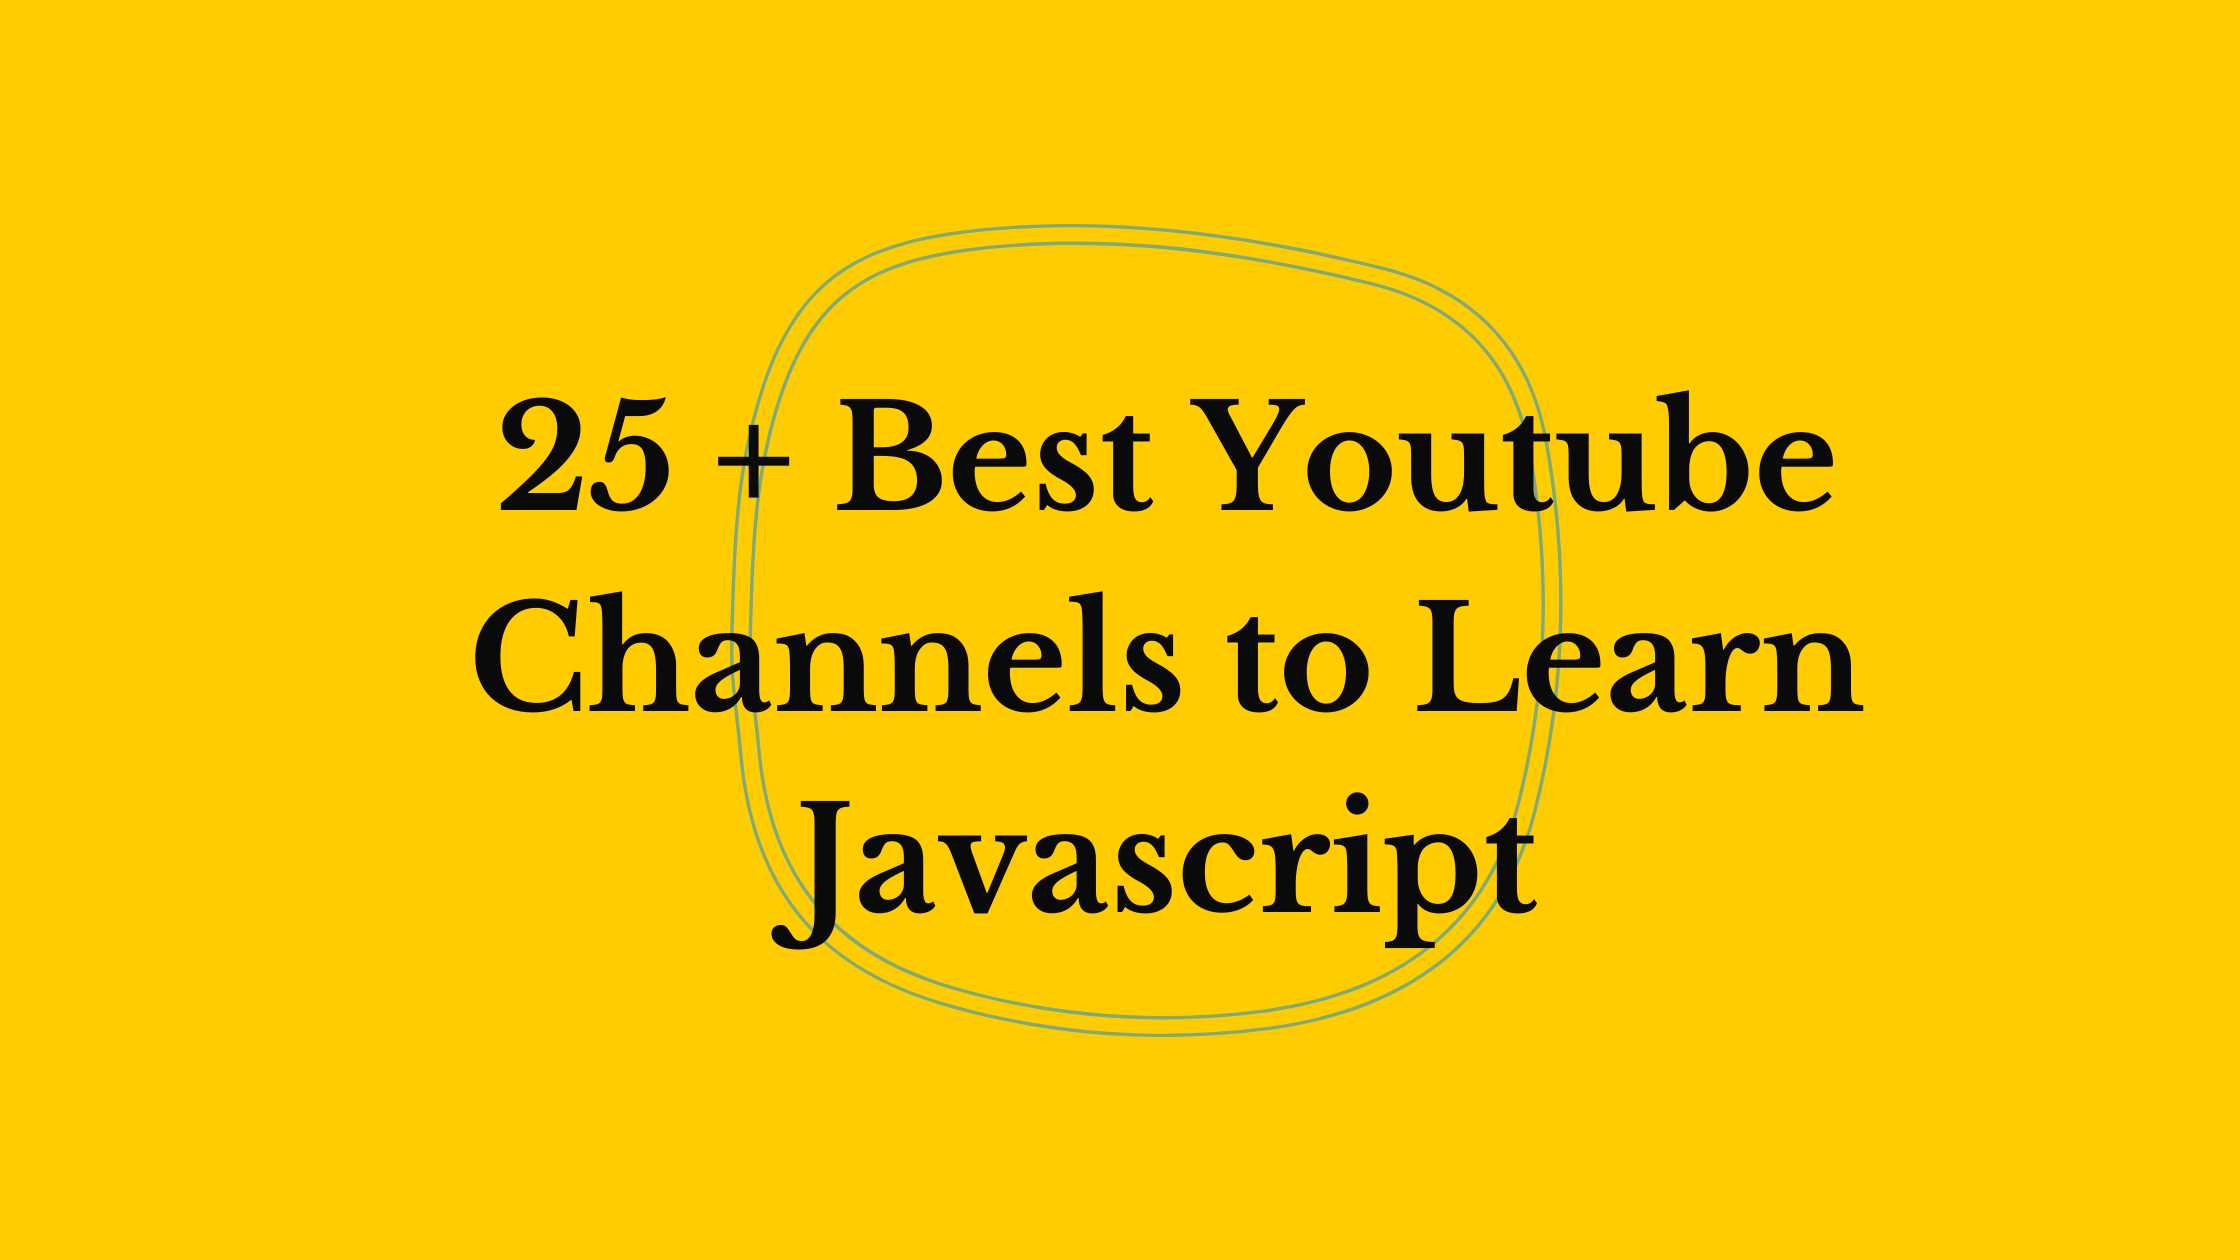 25 + Best Youtube Channels to Learn Javascript